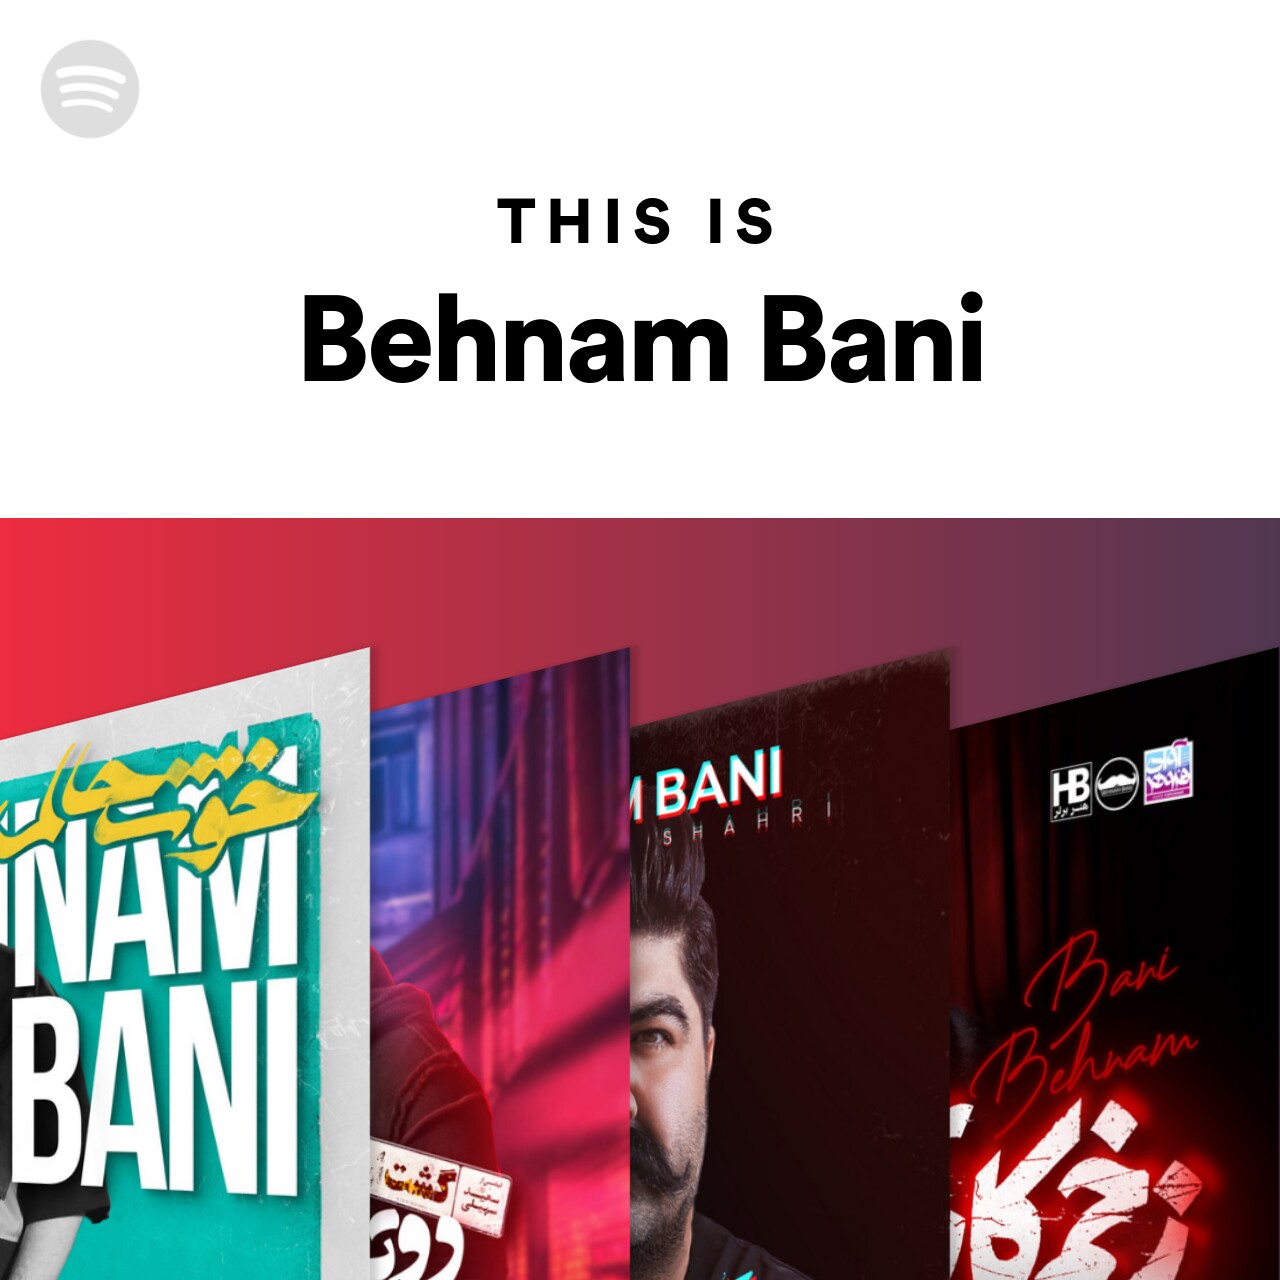 This Is Behnam Bani